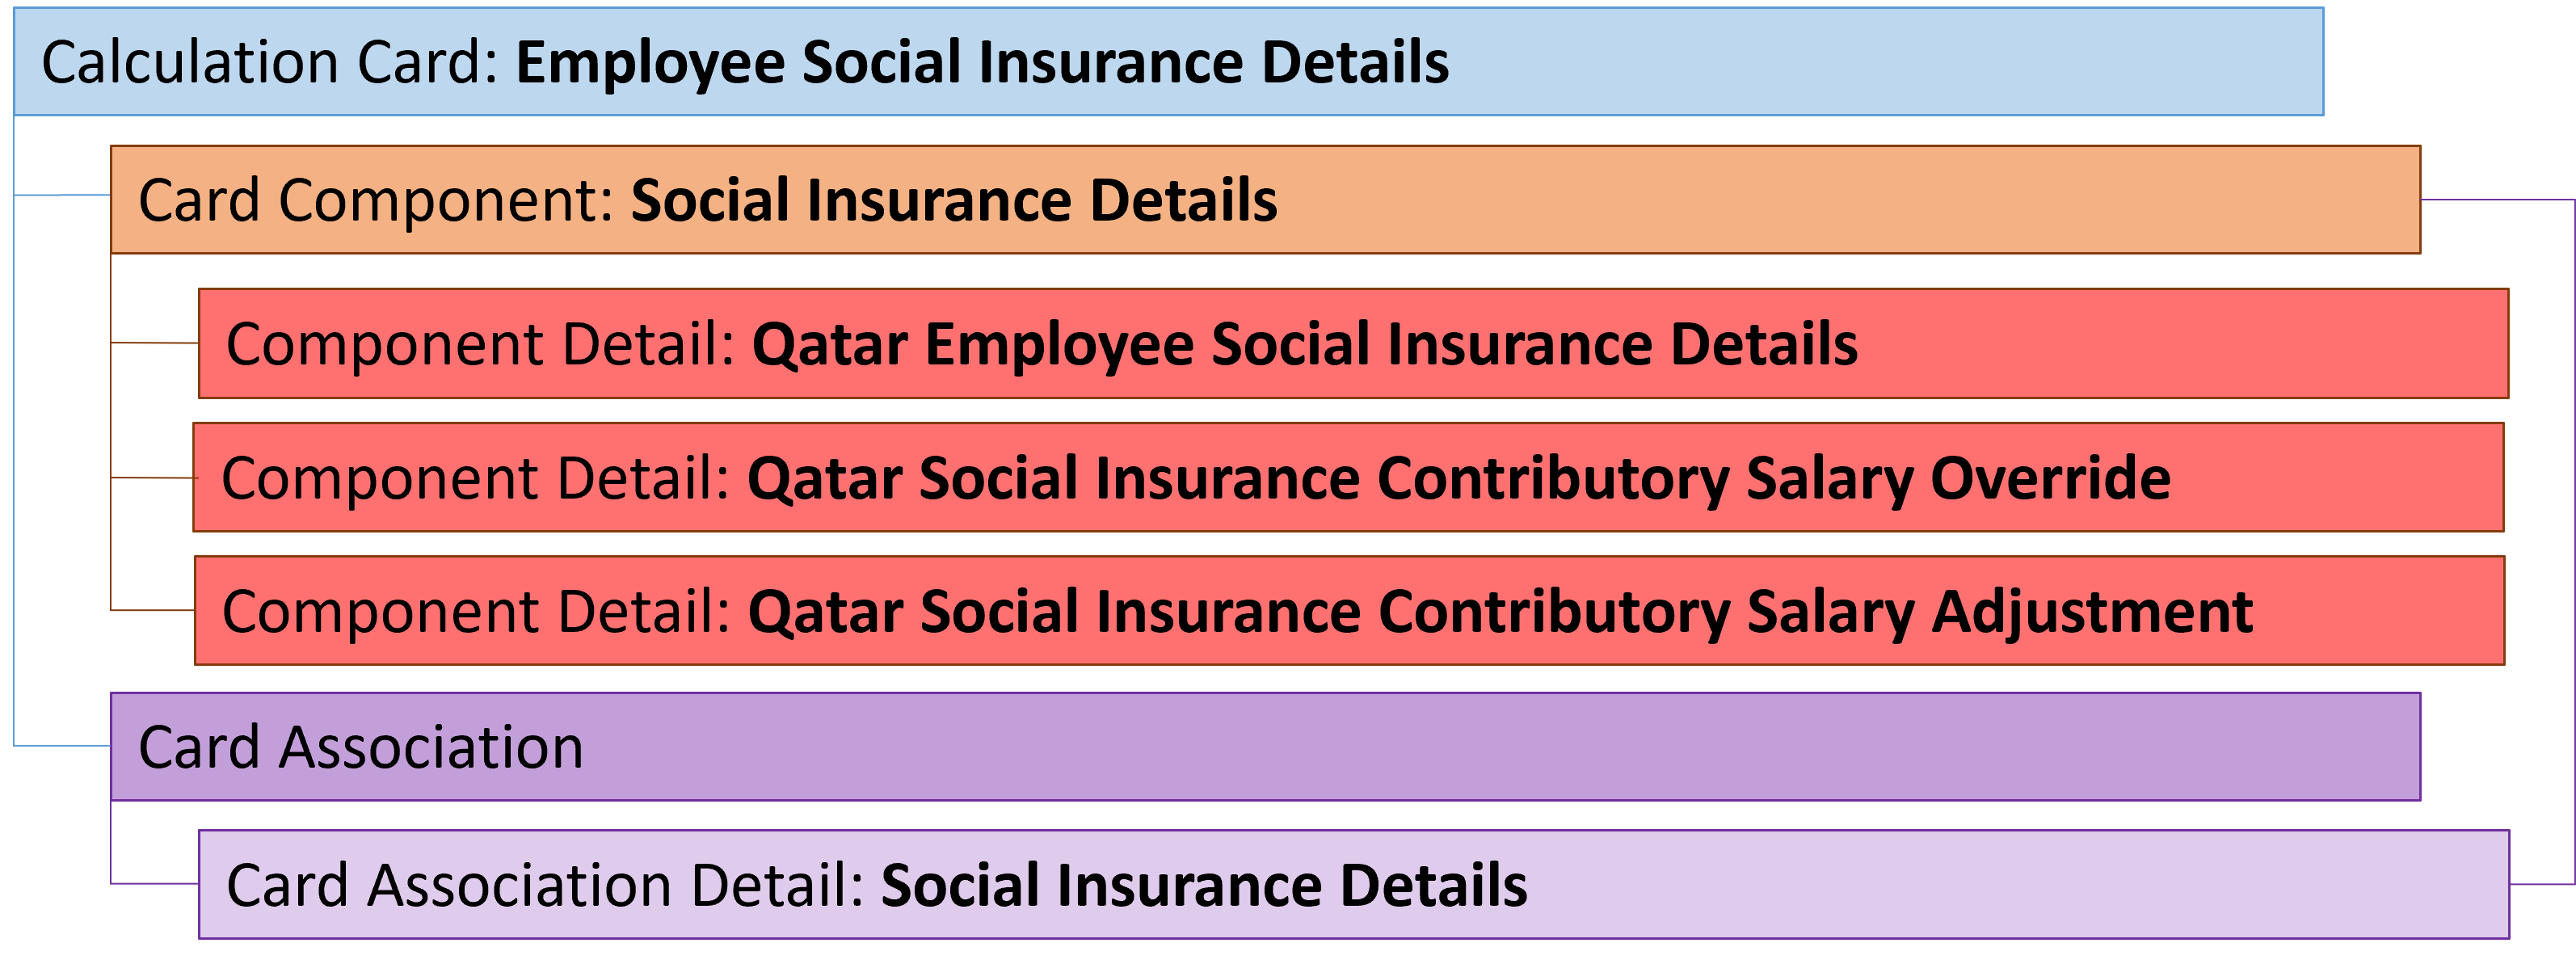 qa employee social insurance details card hierarchy